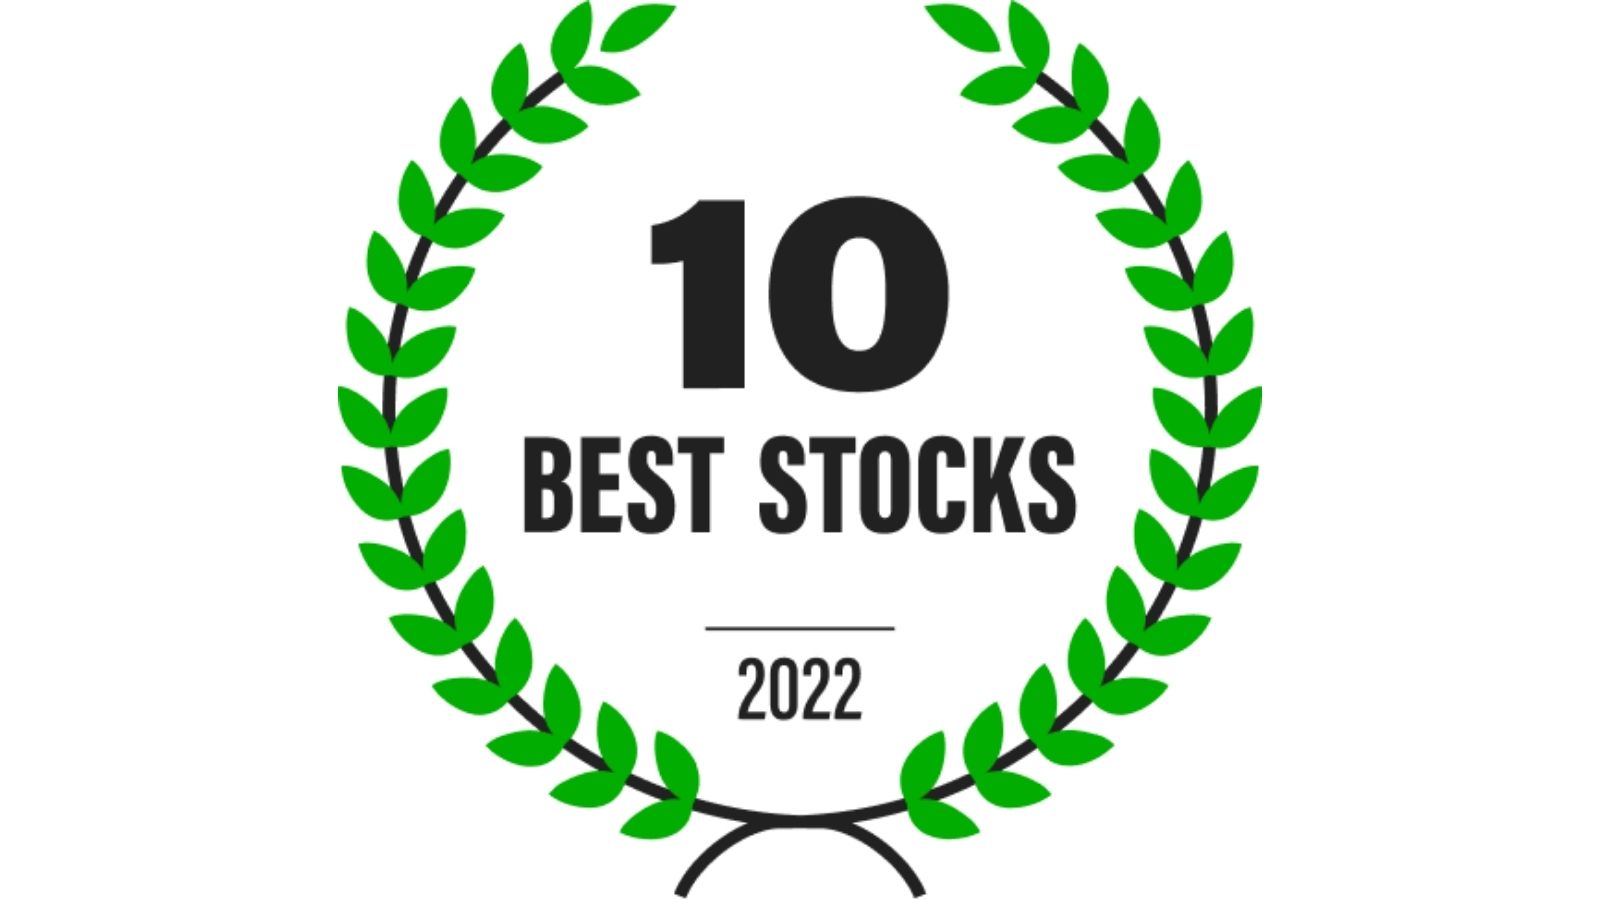 Image of "10 Best Stocks - 2022"